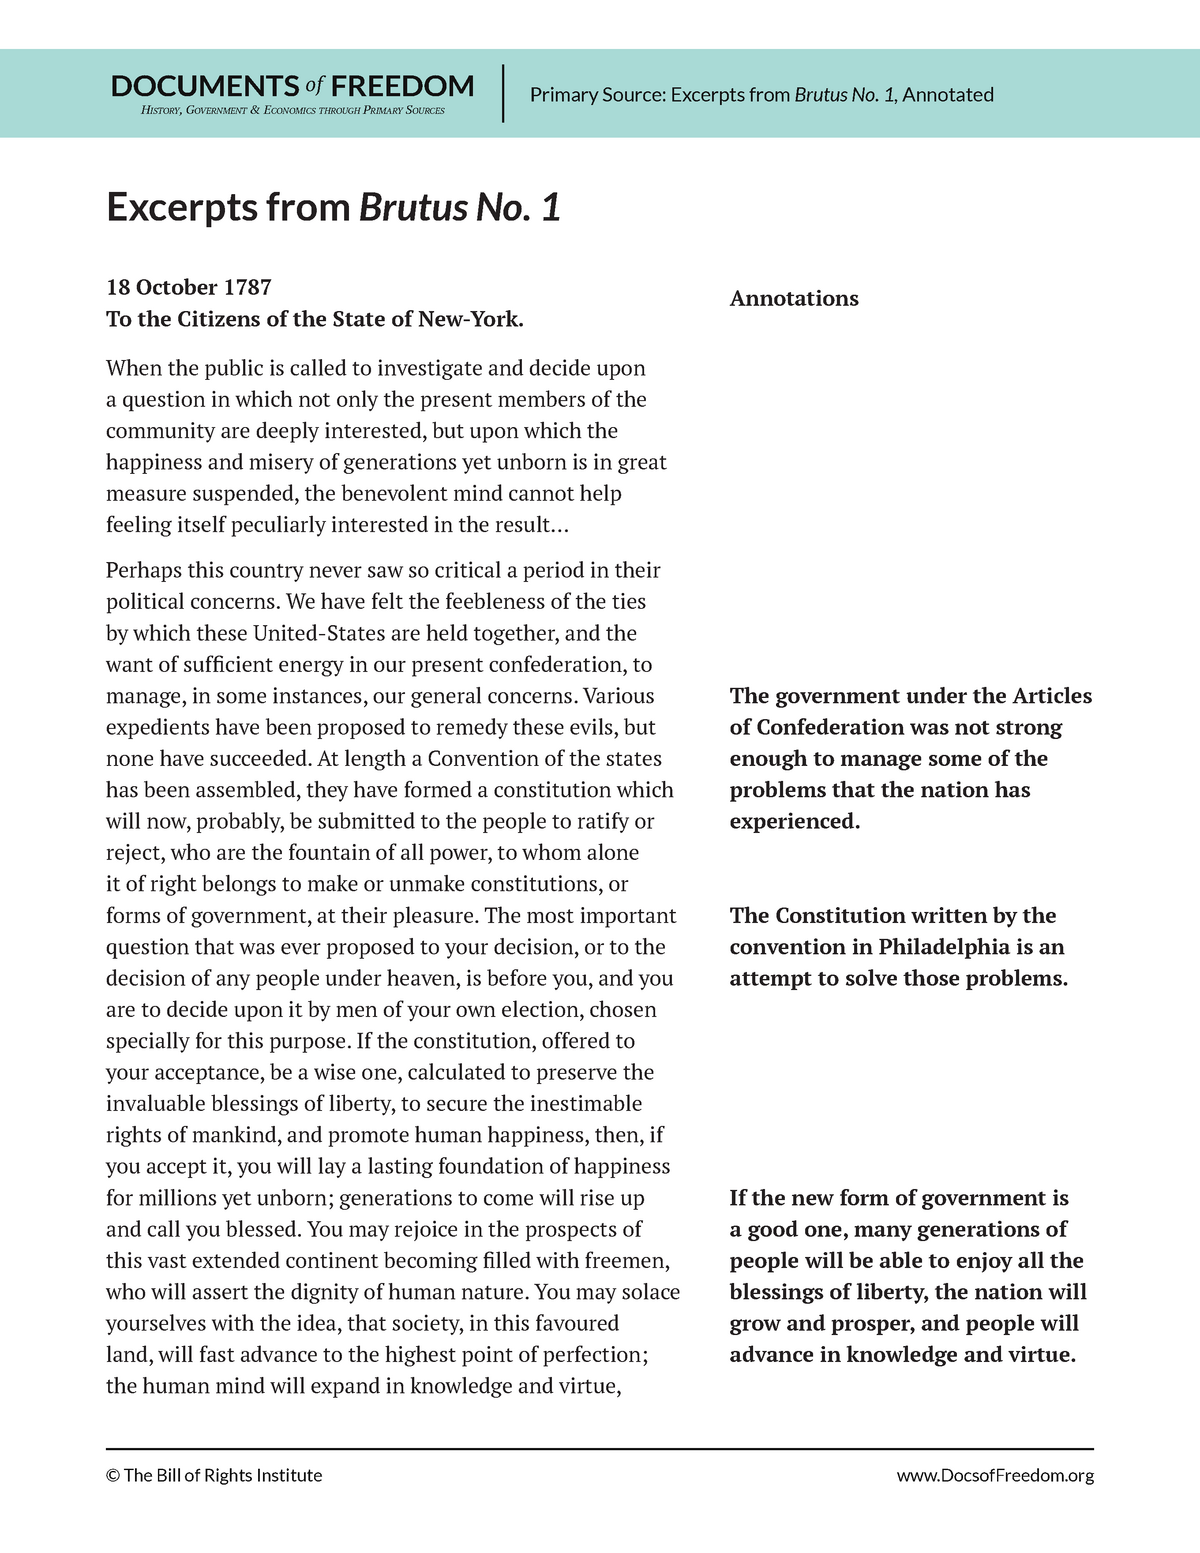 brutus 1 thesis statement